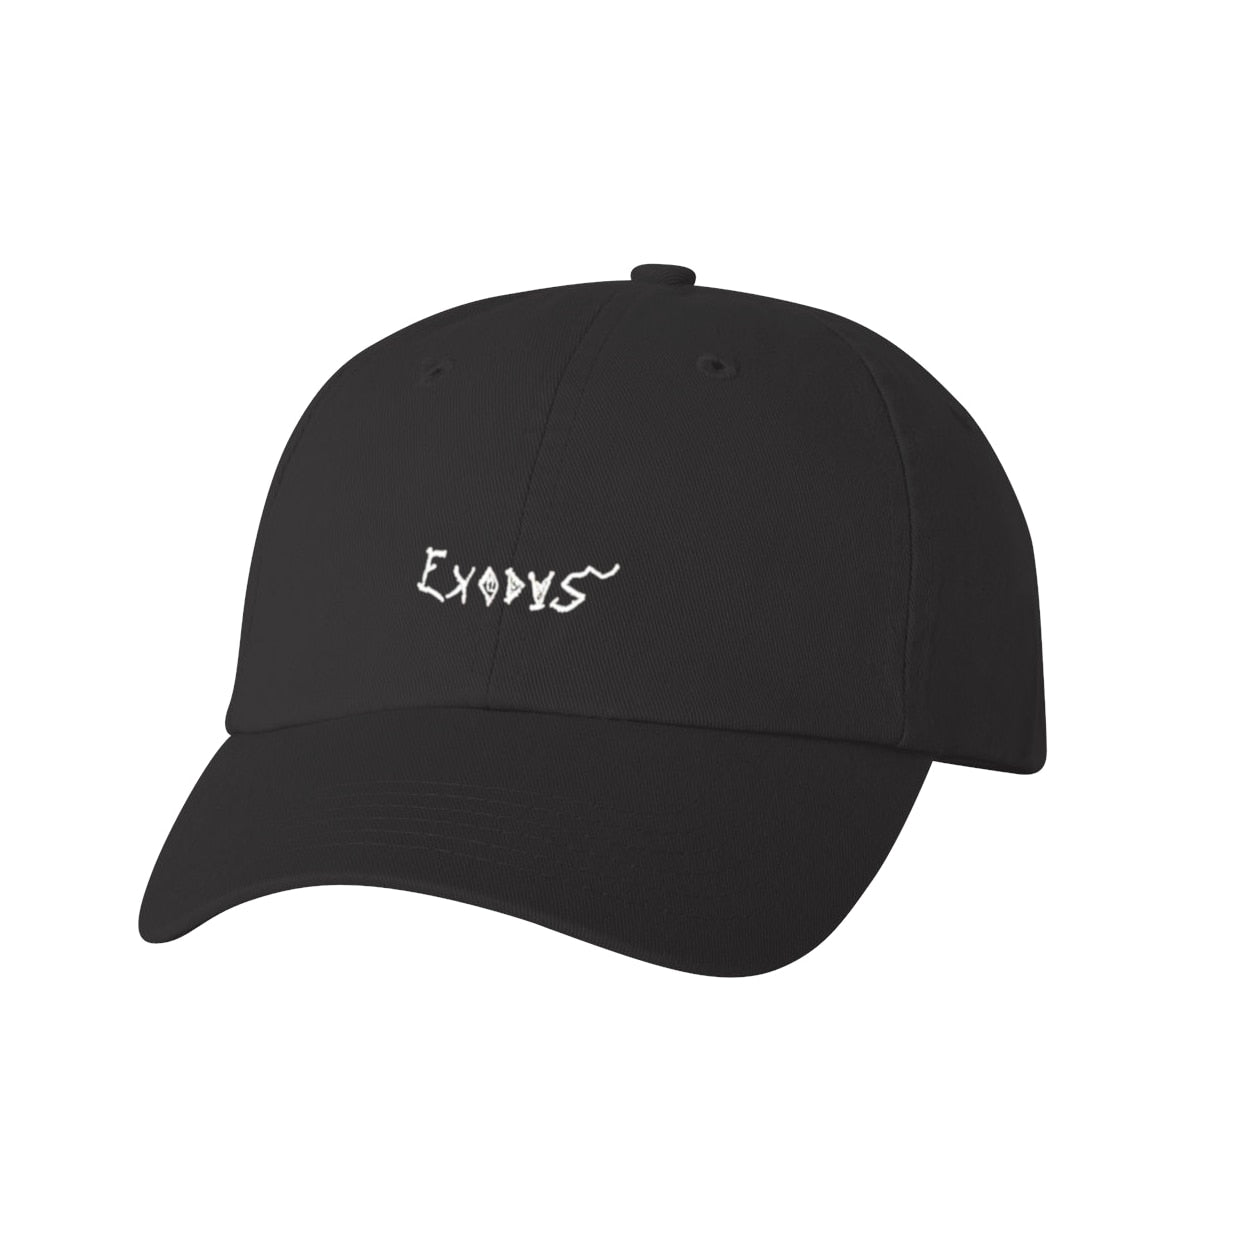 Exodus Anoixi Adjustable Dad Hat - Black/White